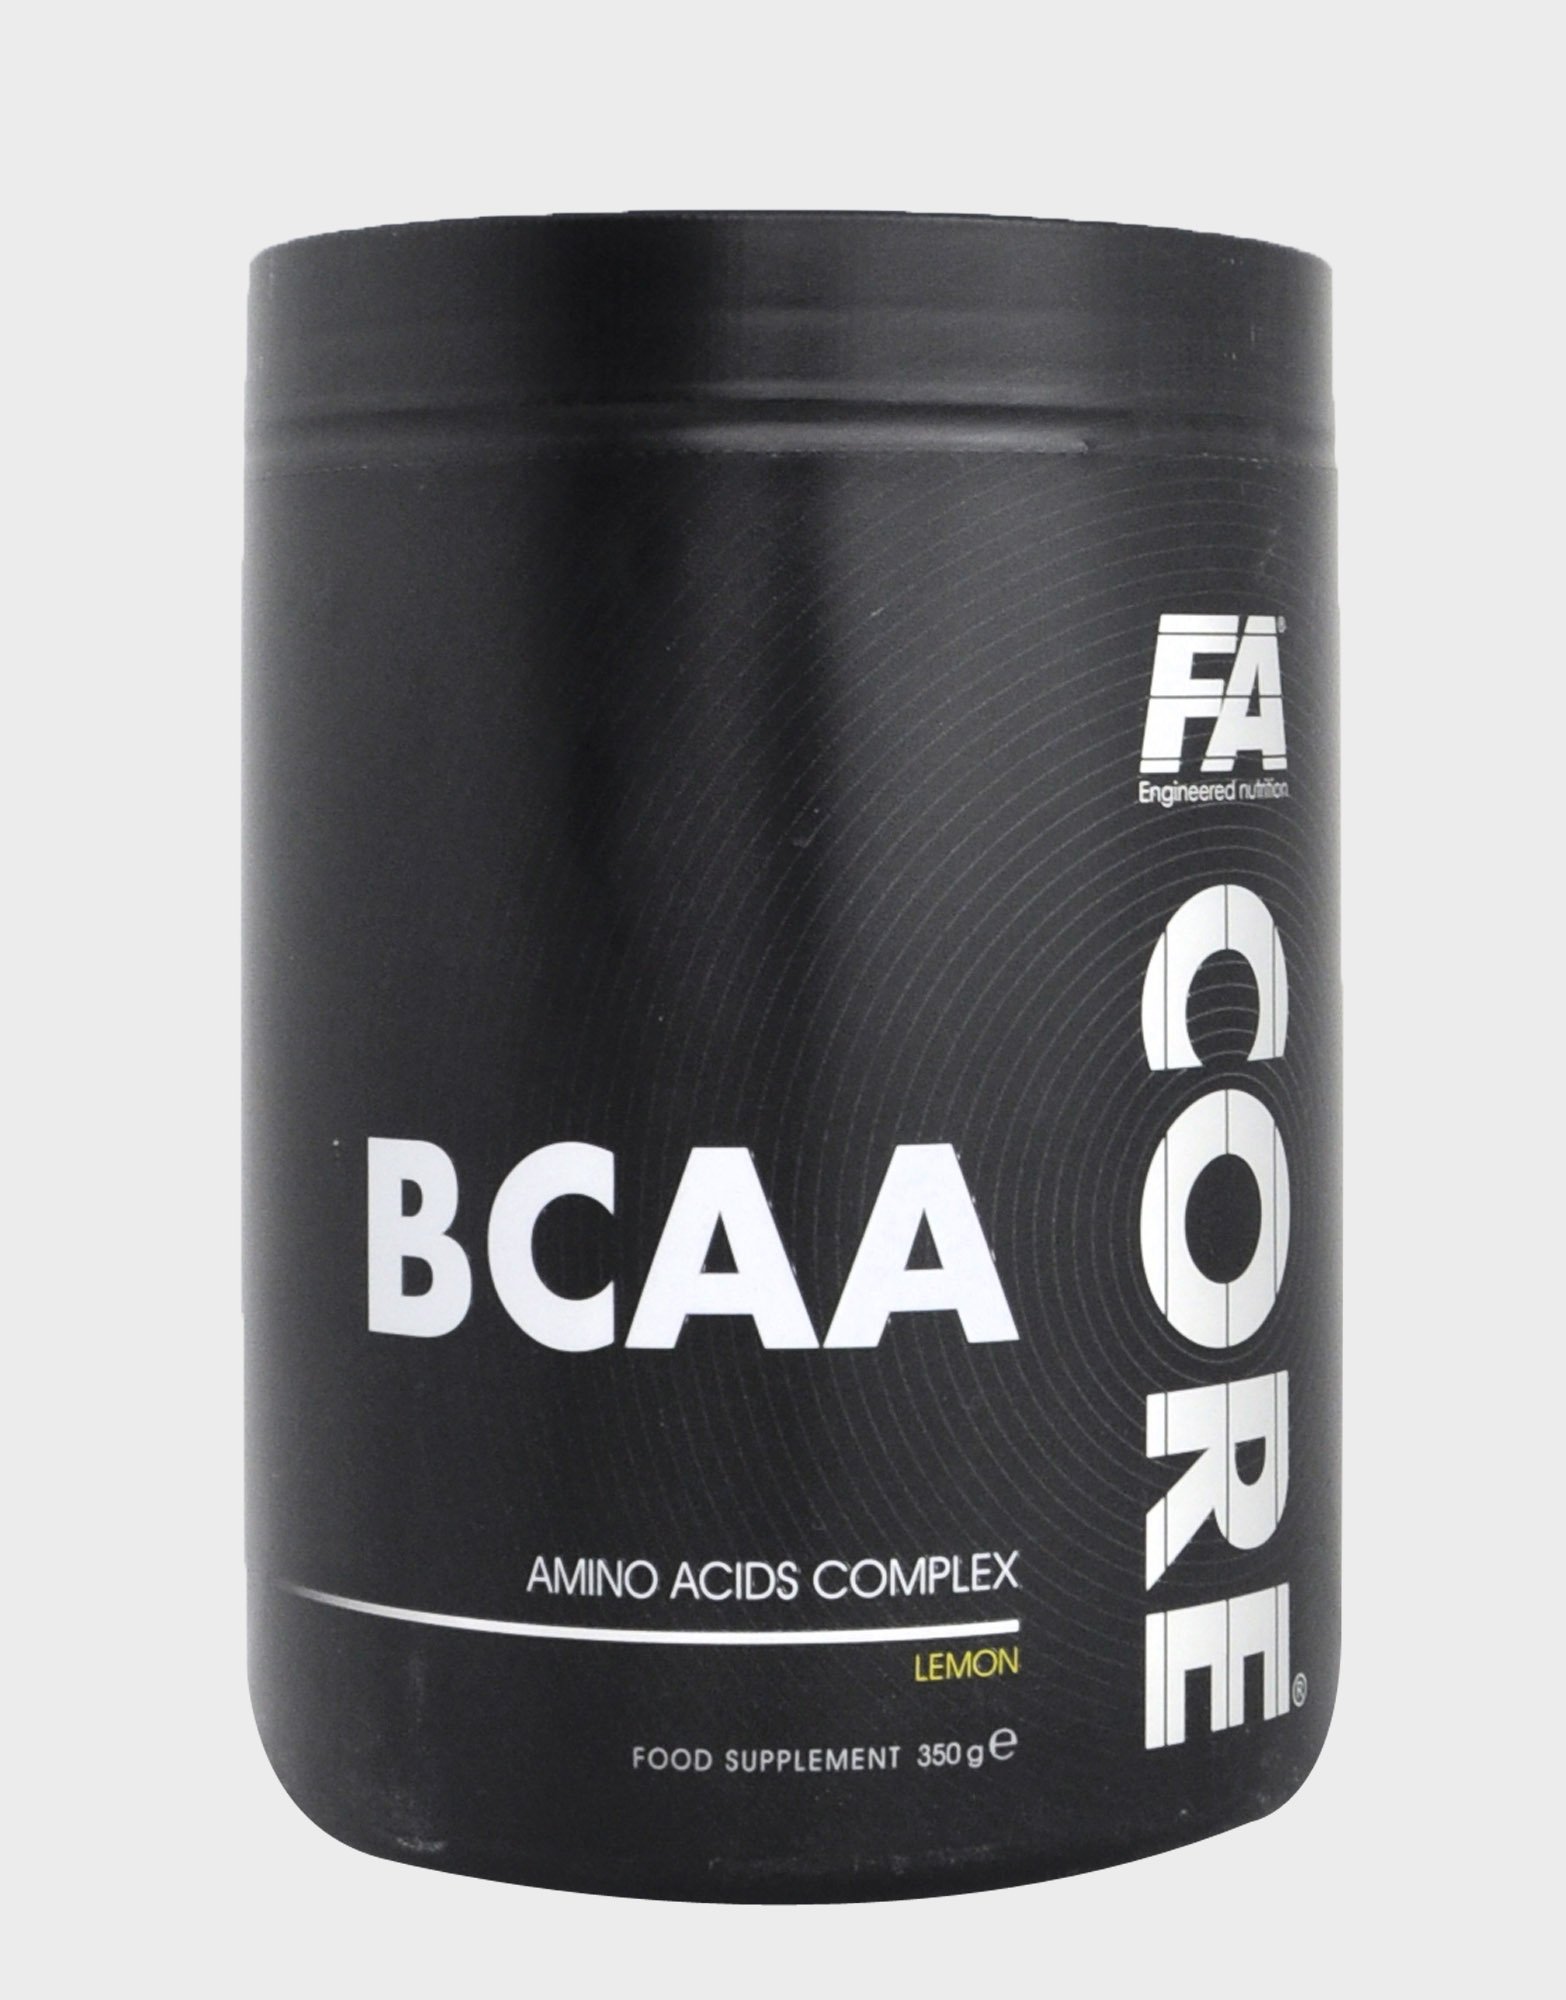 BCAA Core, 350 g, Fitness Authority. BCAA. Weight Loss स्वास्थ्य लाभ Anti-catabolic properties Lean muscle mass 